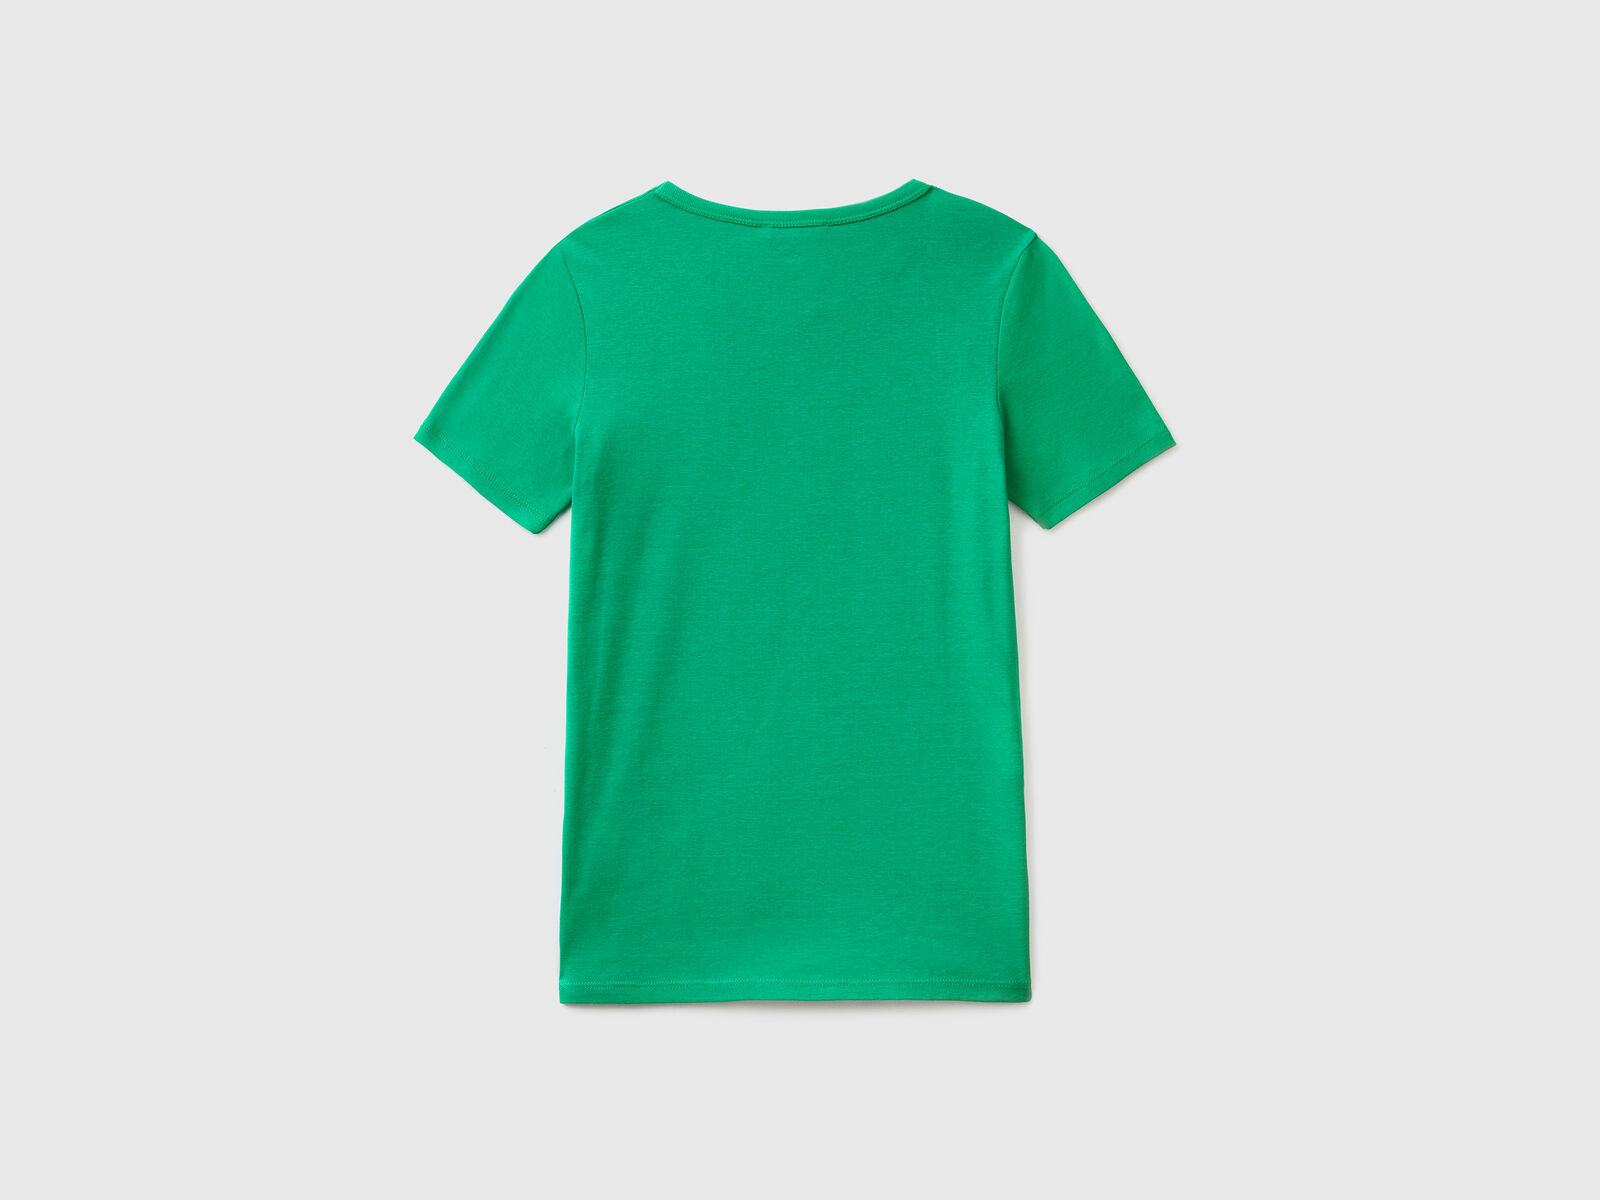 T-shirt in 100% cotton with - Benetton Green | logo glitter print